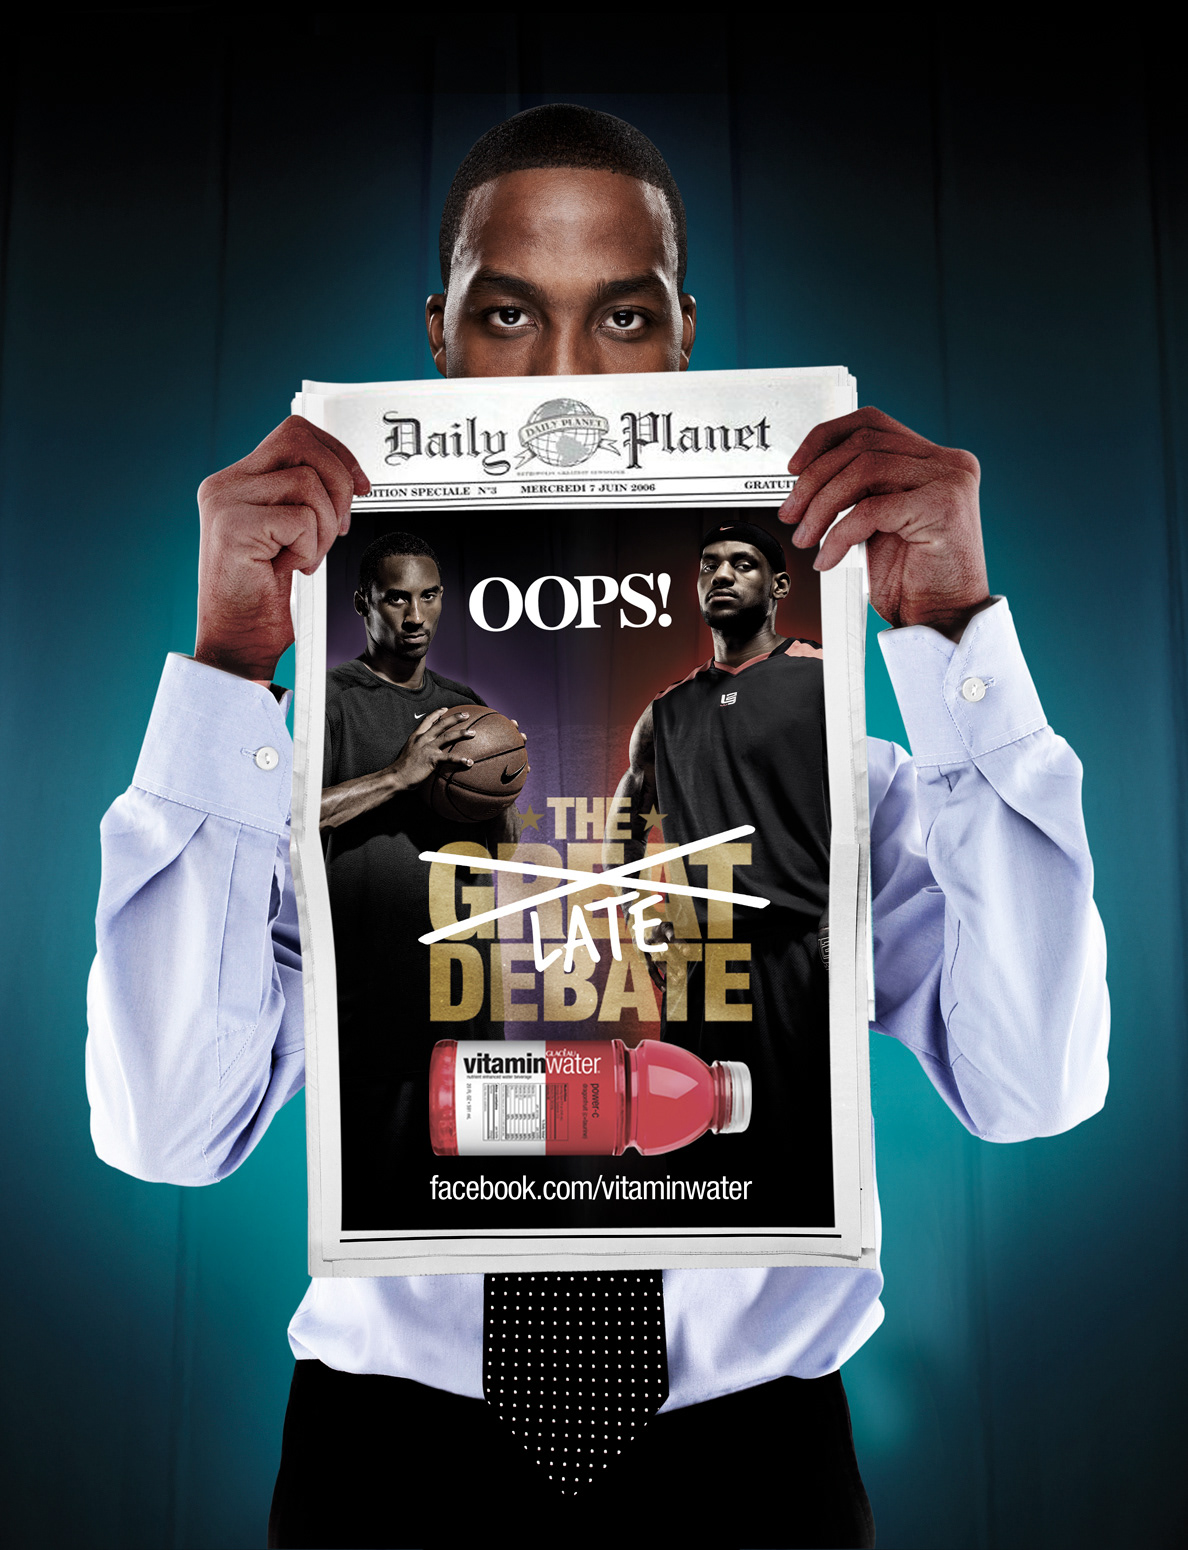 LeBron James Kobe Bryant LeBron kobe debate Election poster basketball Miami Heat la lakers mvp NBA